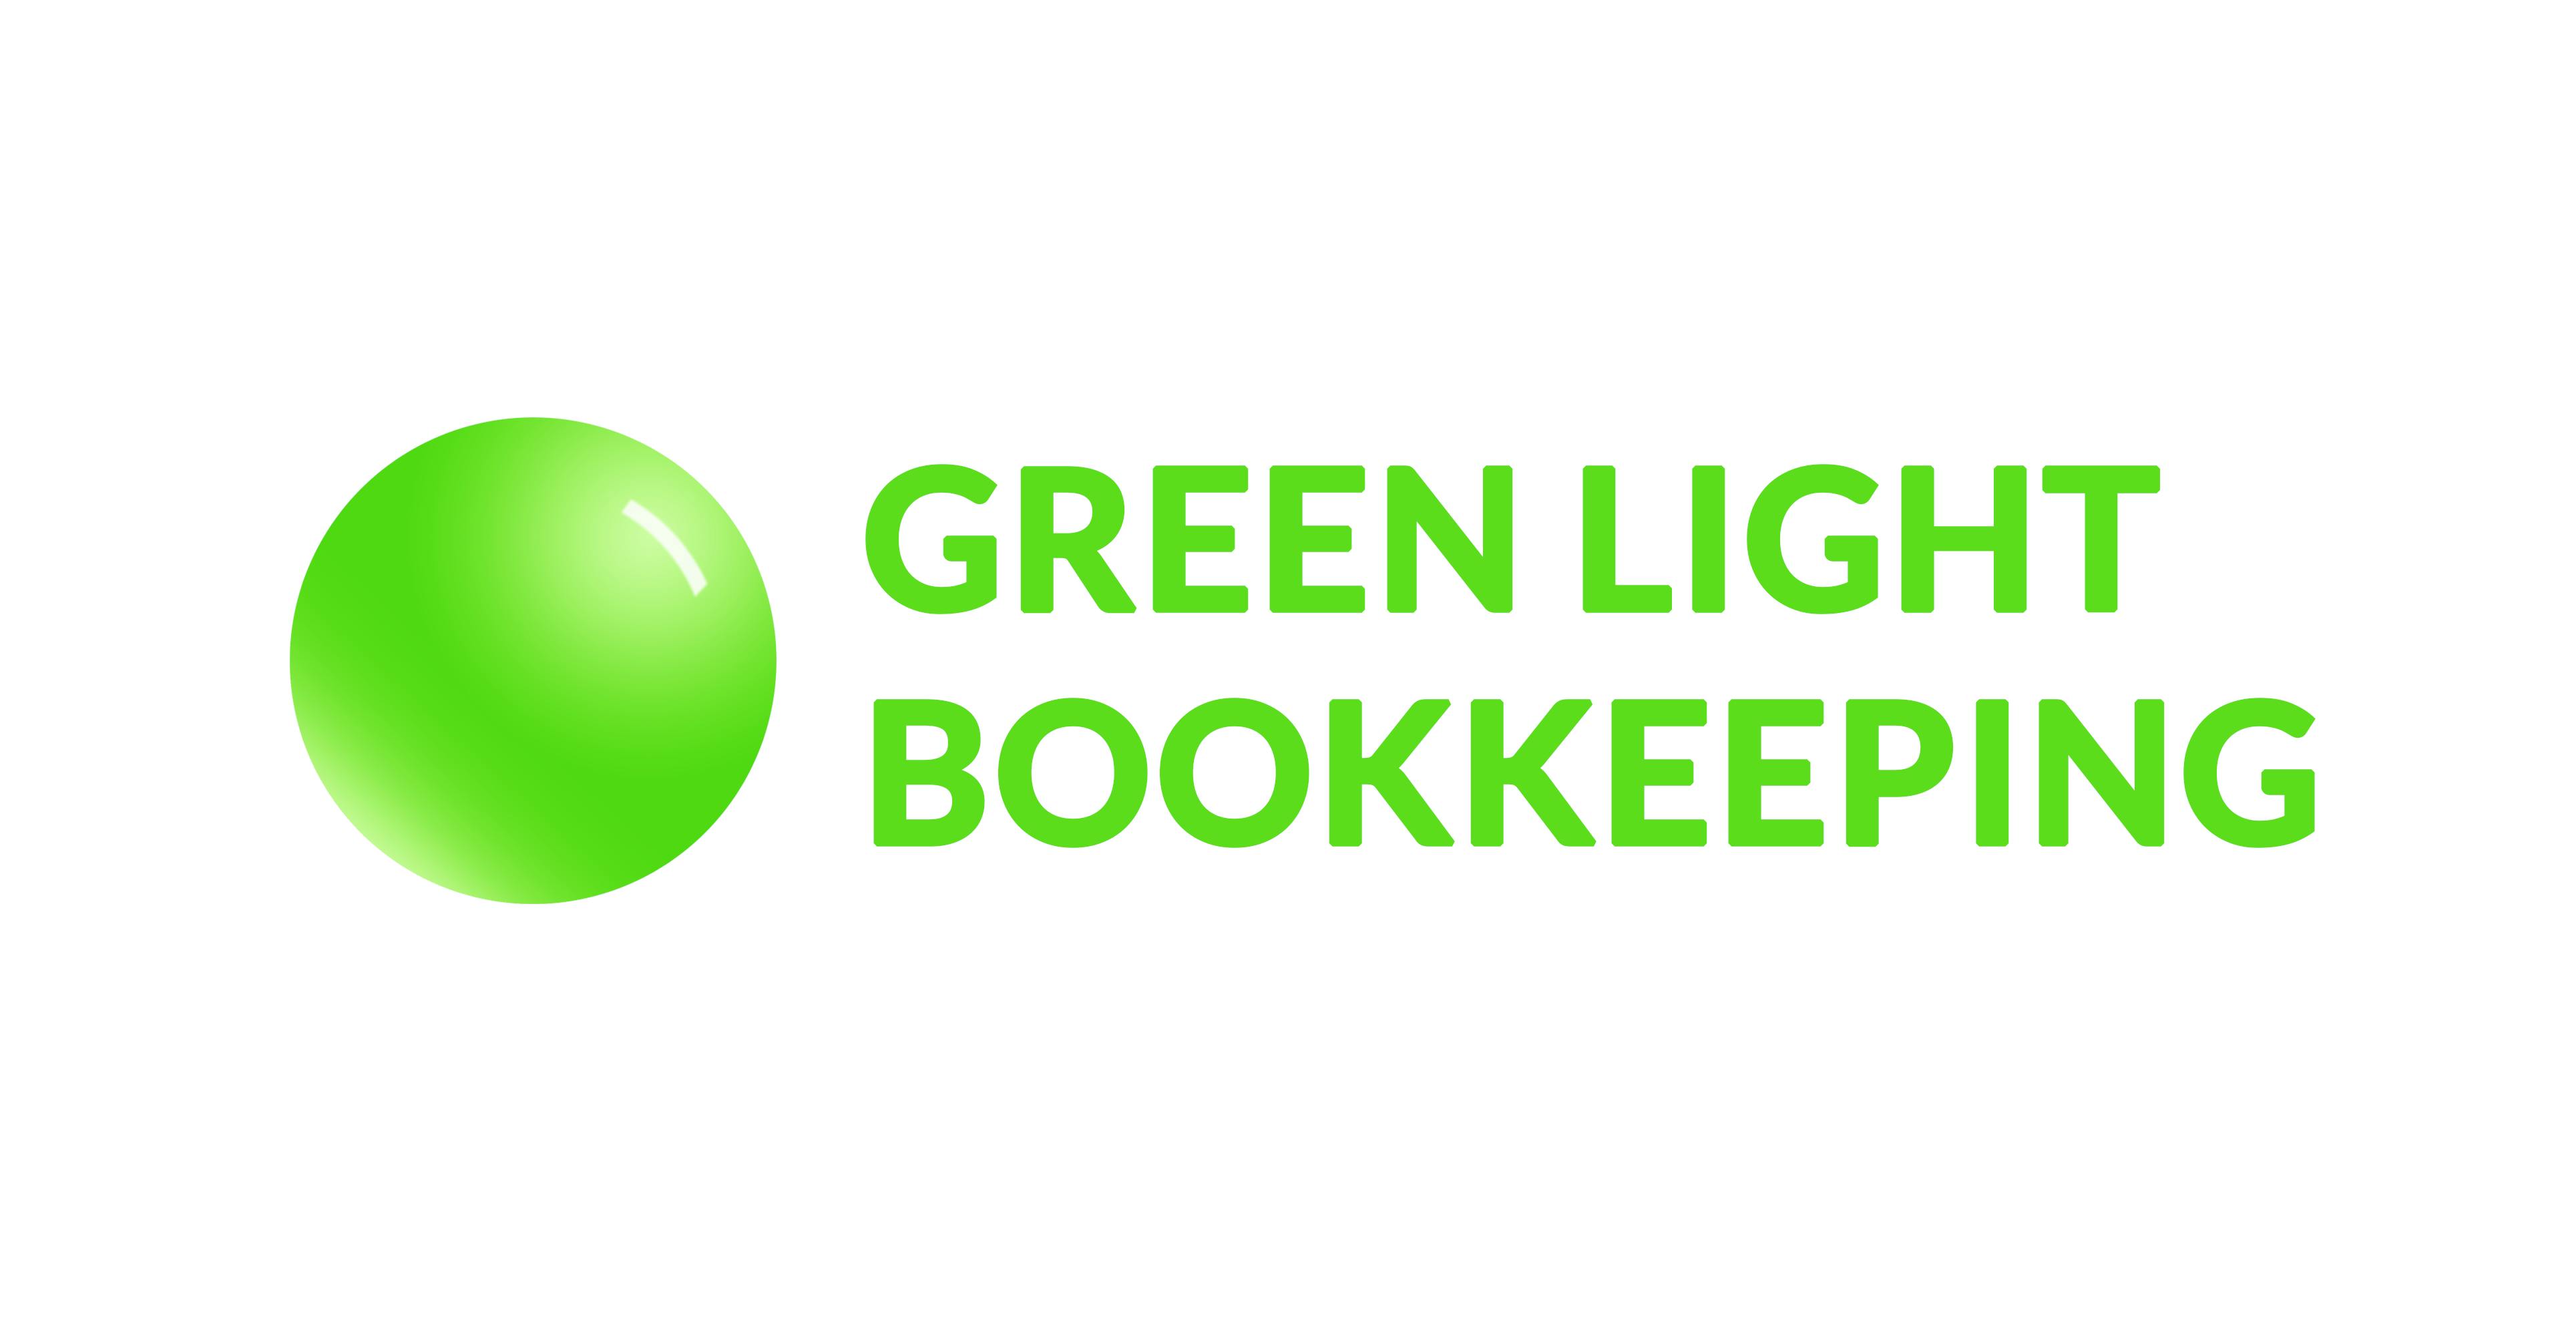 Free stock photo of Green Light Bookkeeping Logo